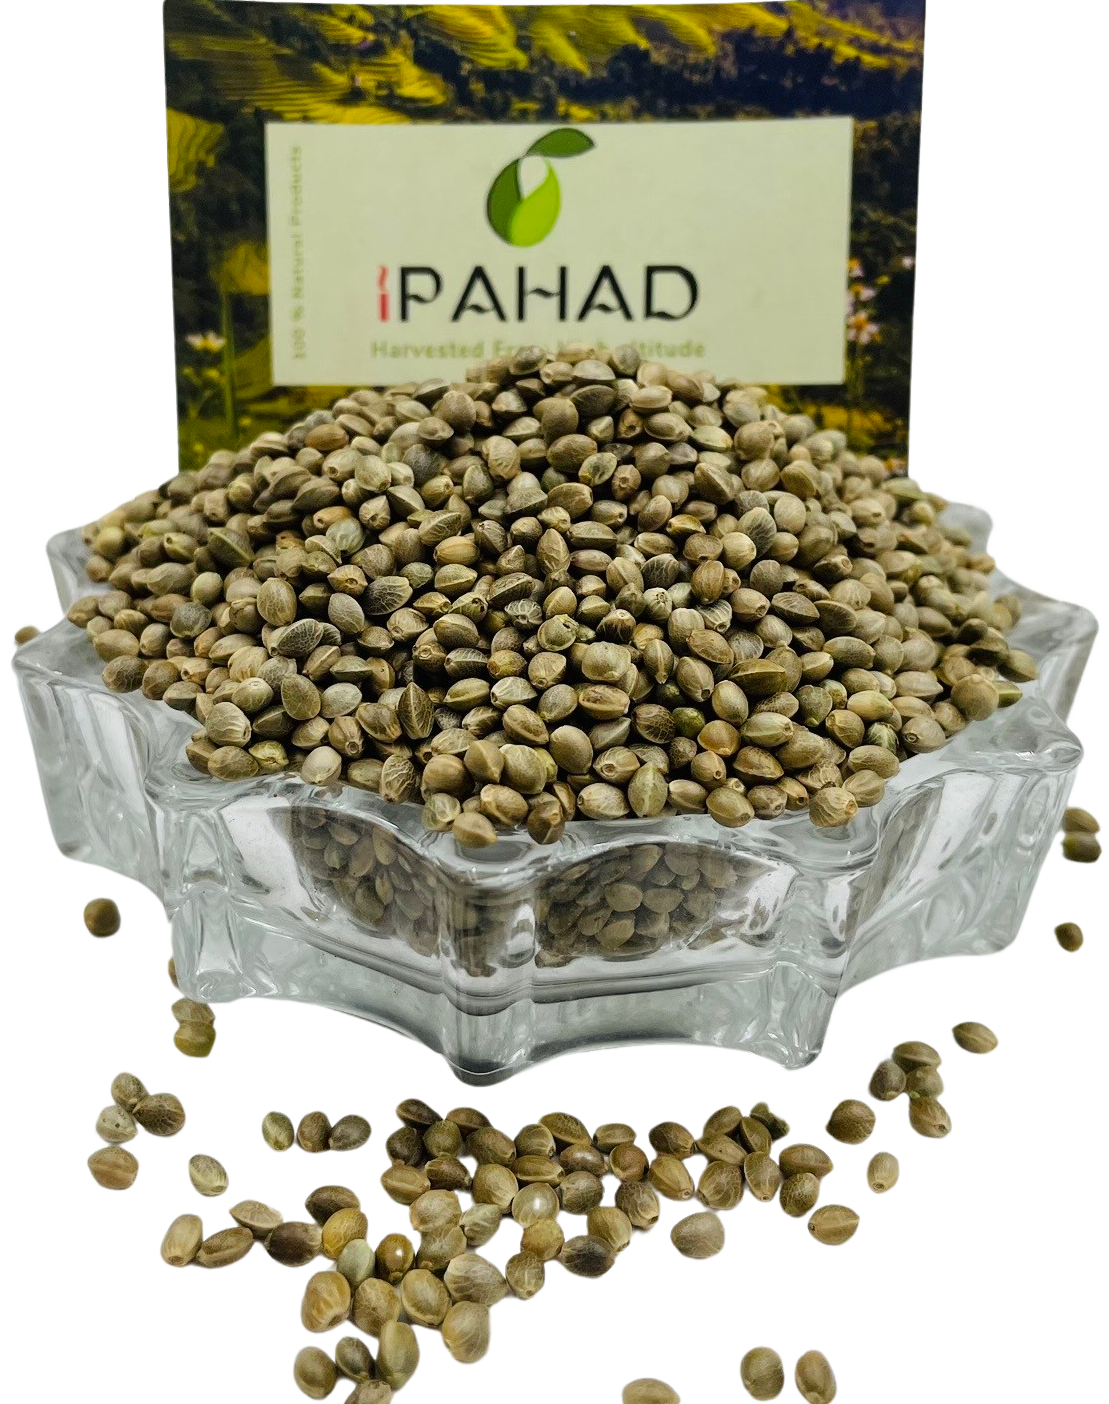 Wholesale Himalayan Hemp Seeds (Bhang Dana) Buy in Bulk Quantity